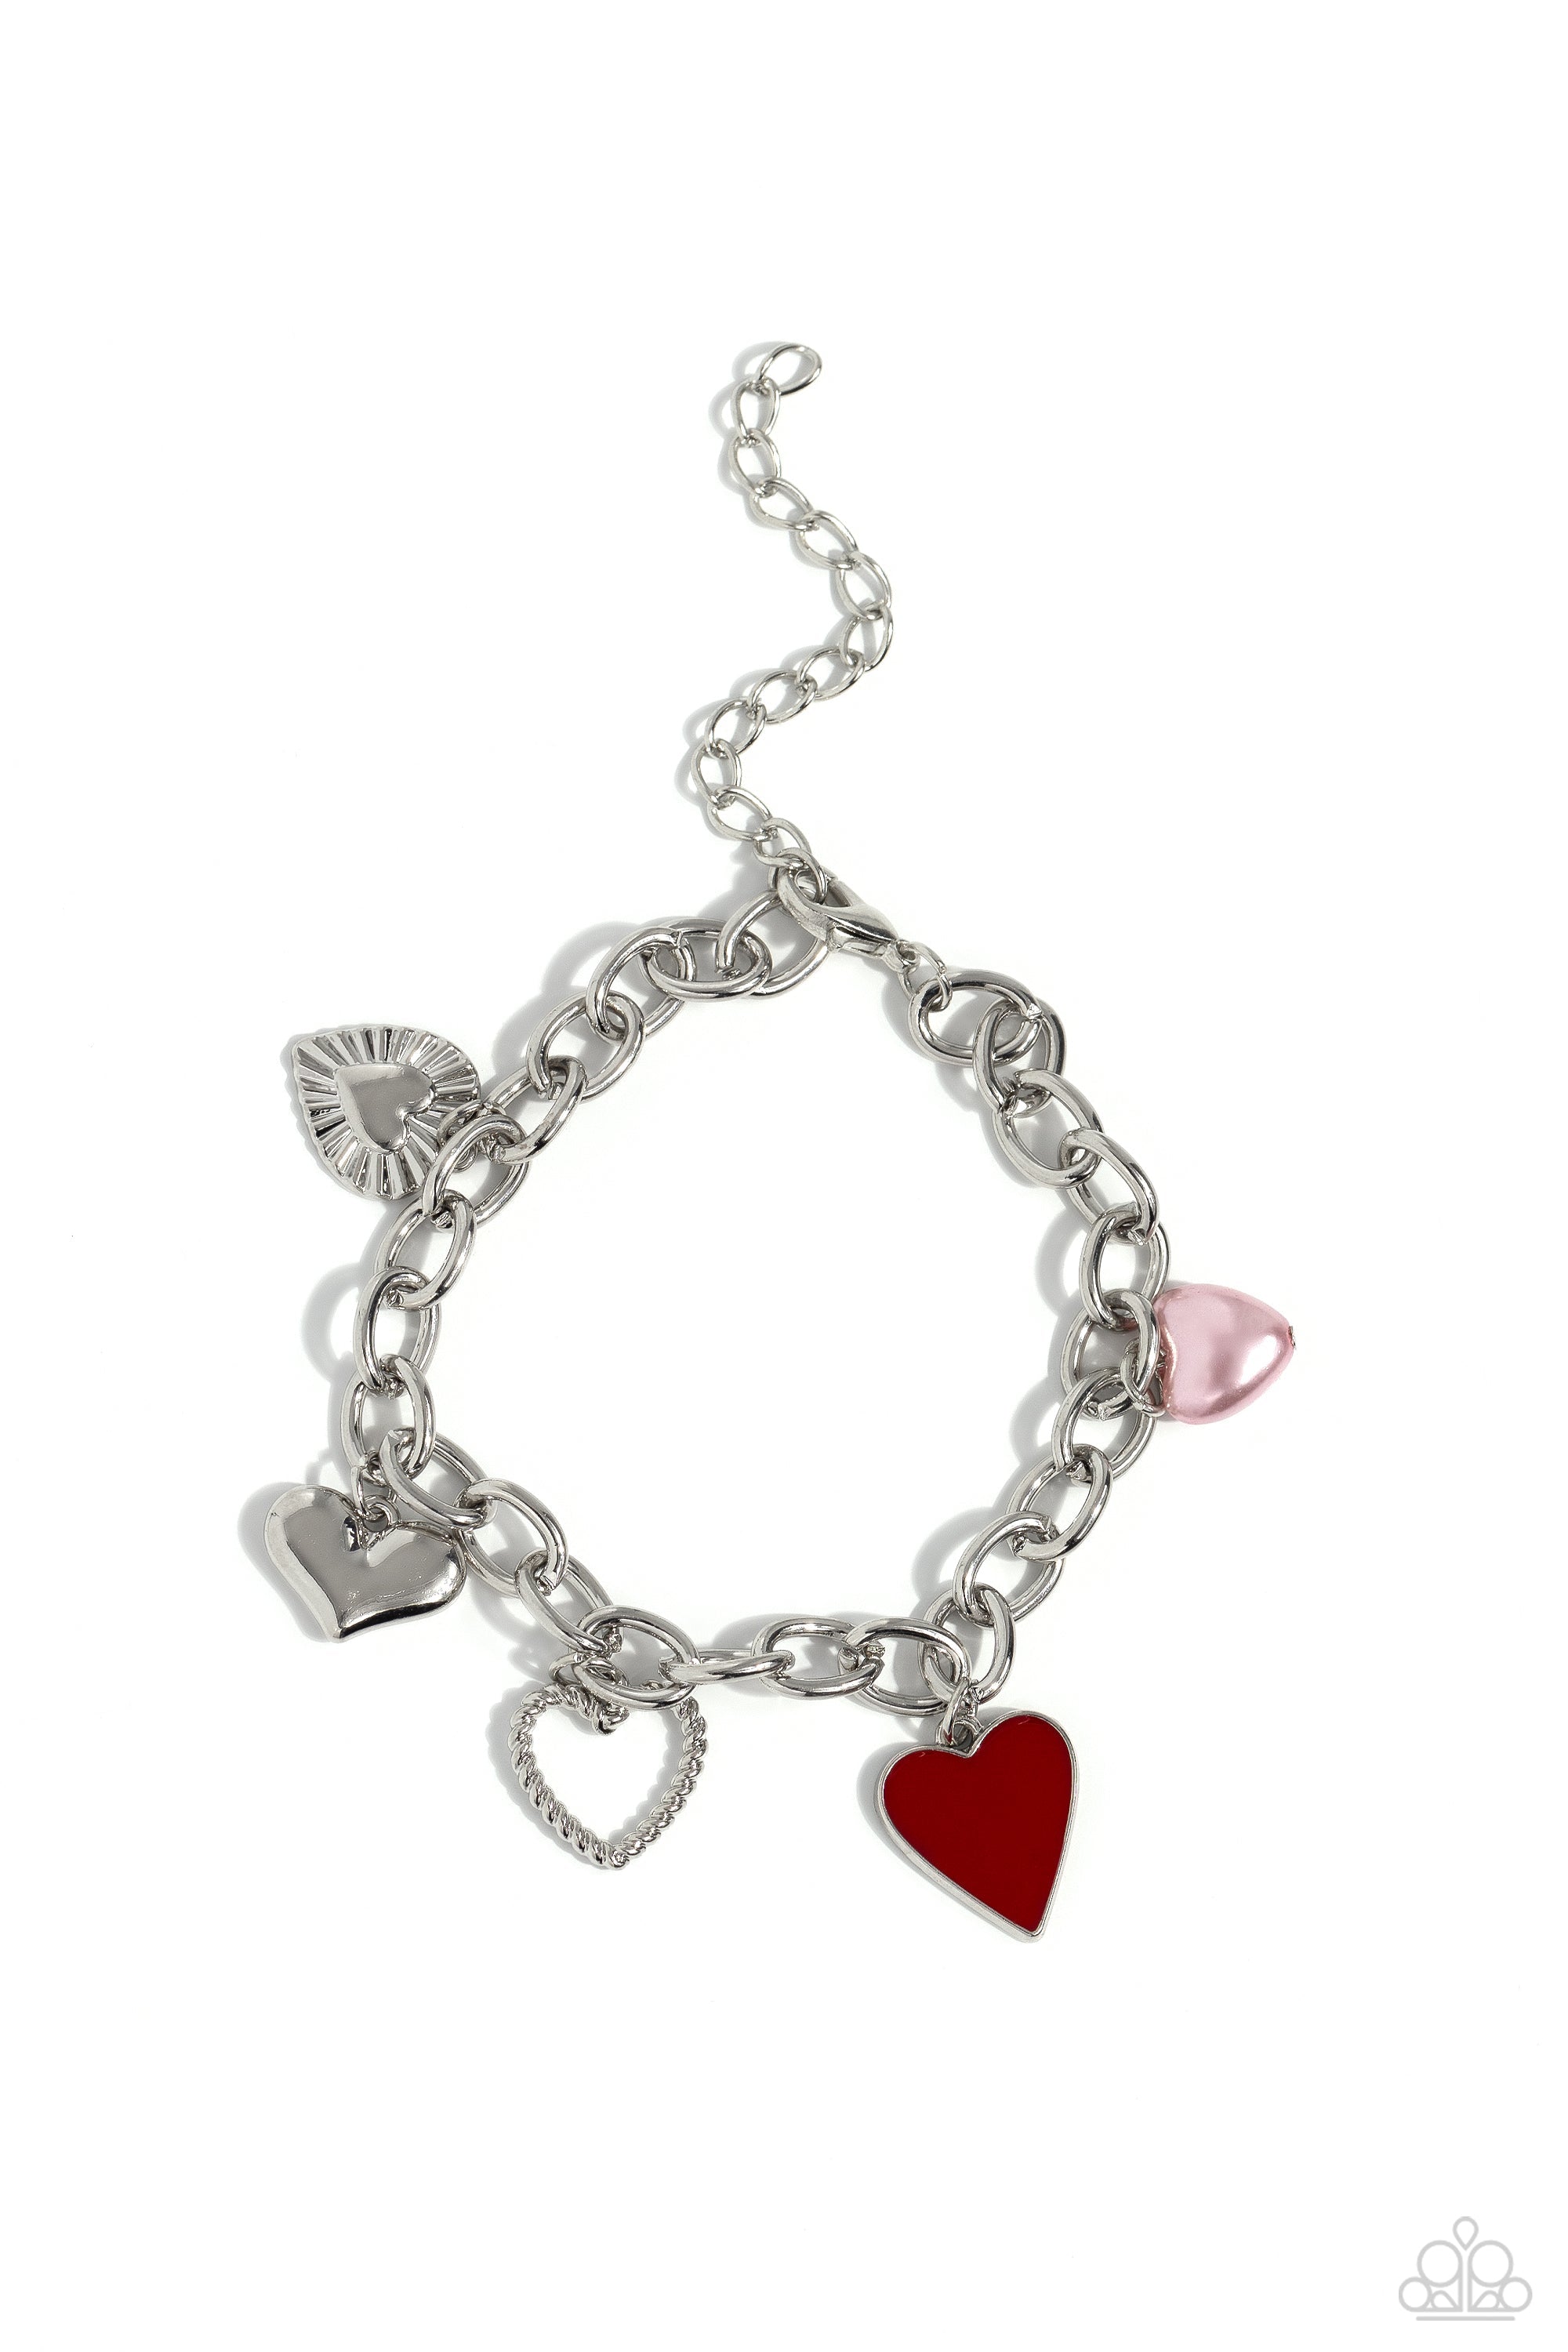 Diverse Dalliance Multi Heart Charm Bracelet - Paparazzi Accessories- lightbox - CarasShop.com - $5 Jewelry by Cara Jewels